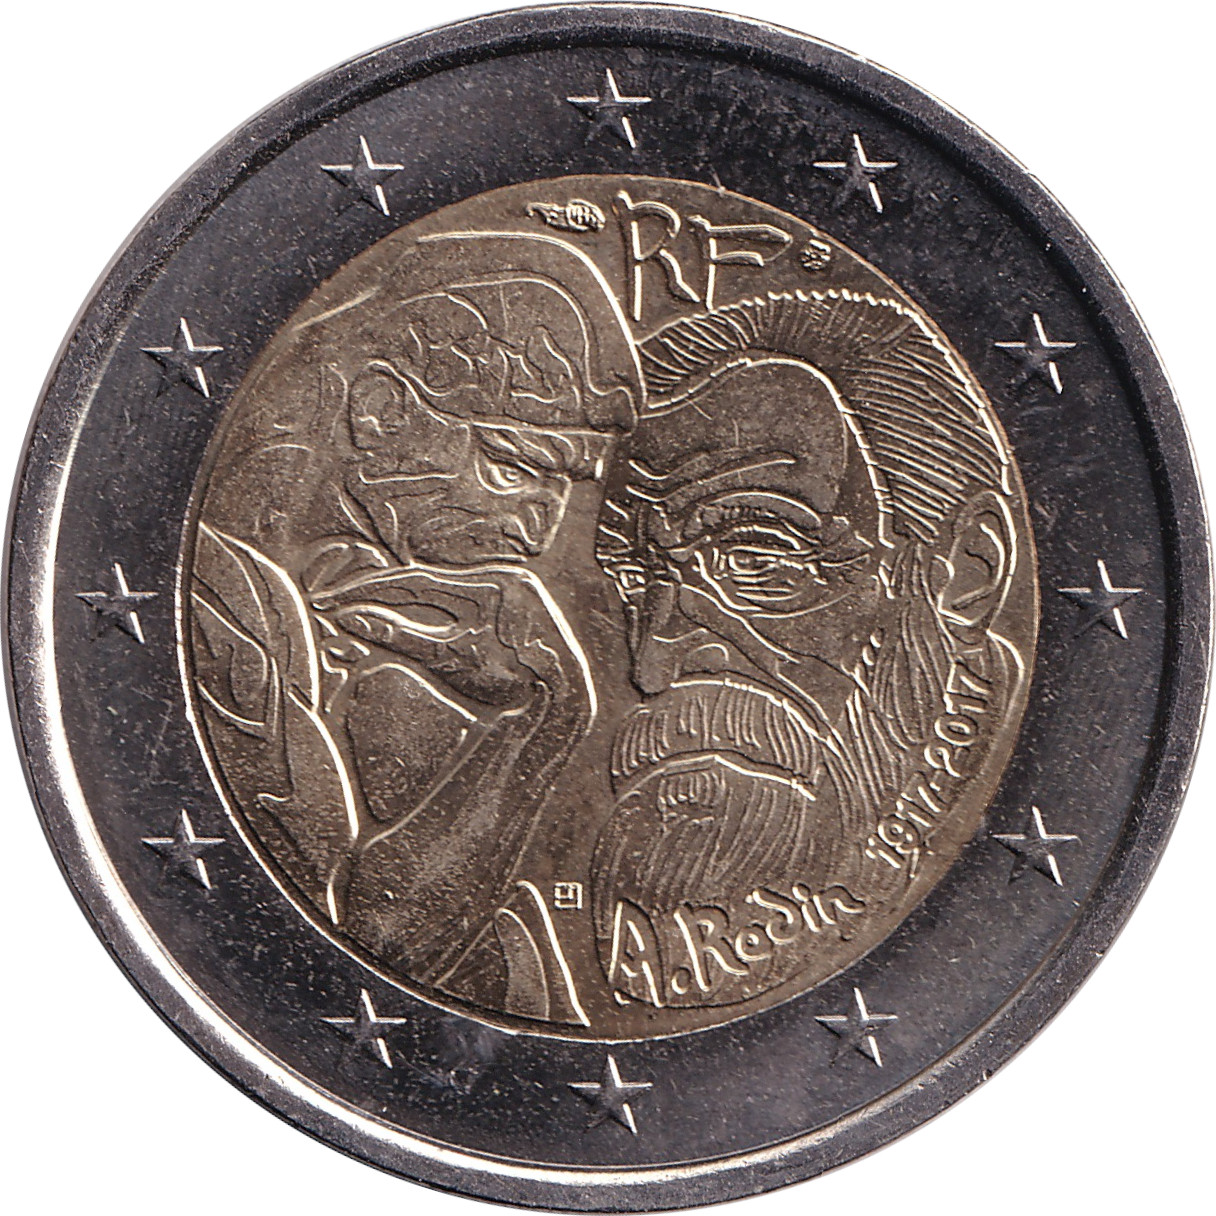 2 euro - Auguste Rodin